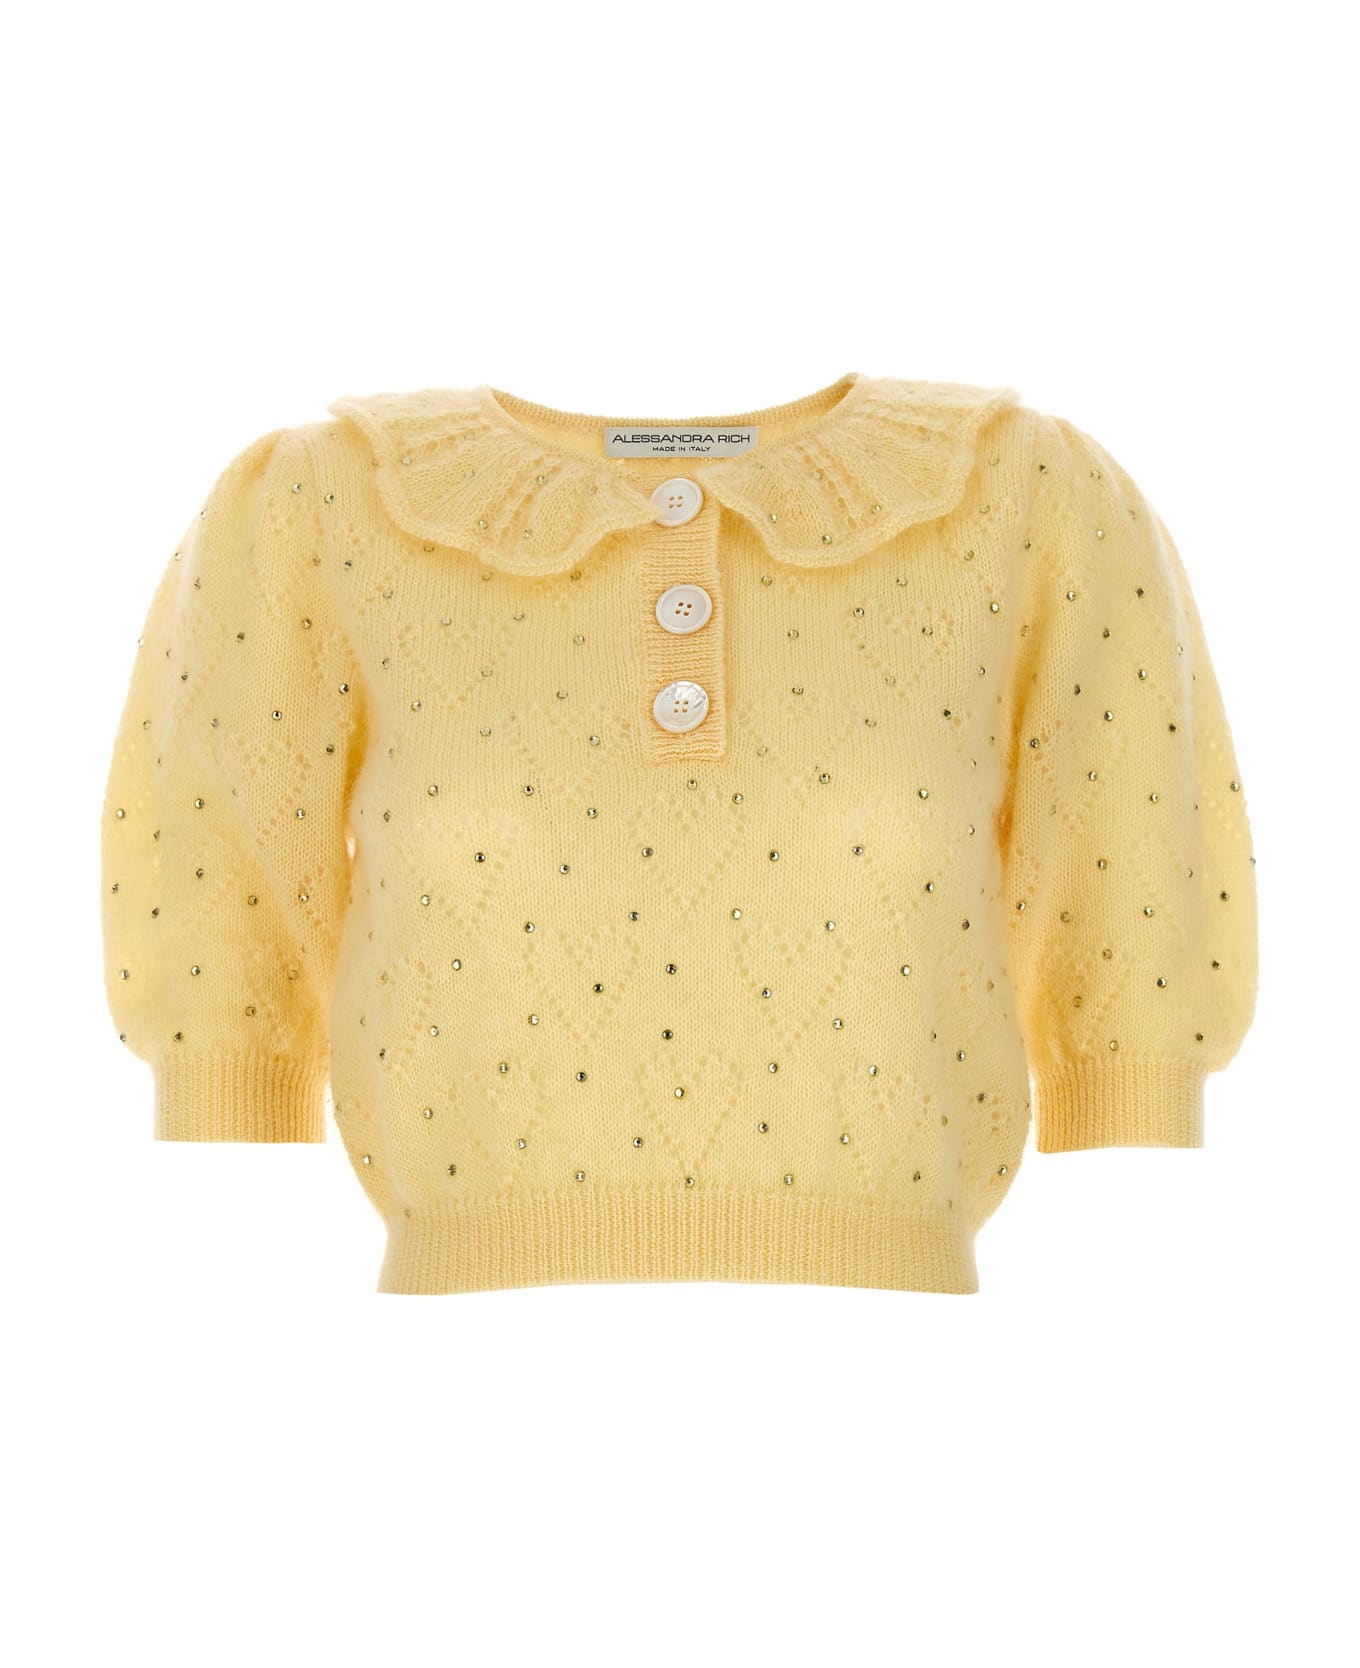 Alessandra Rich Rhinestone Sweater - Yellow ニットウェア